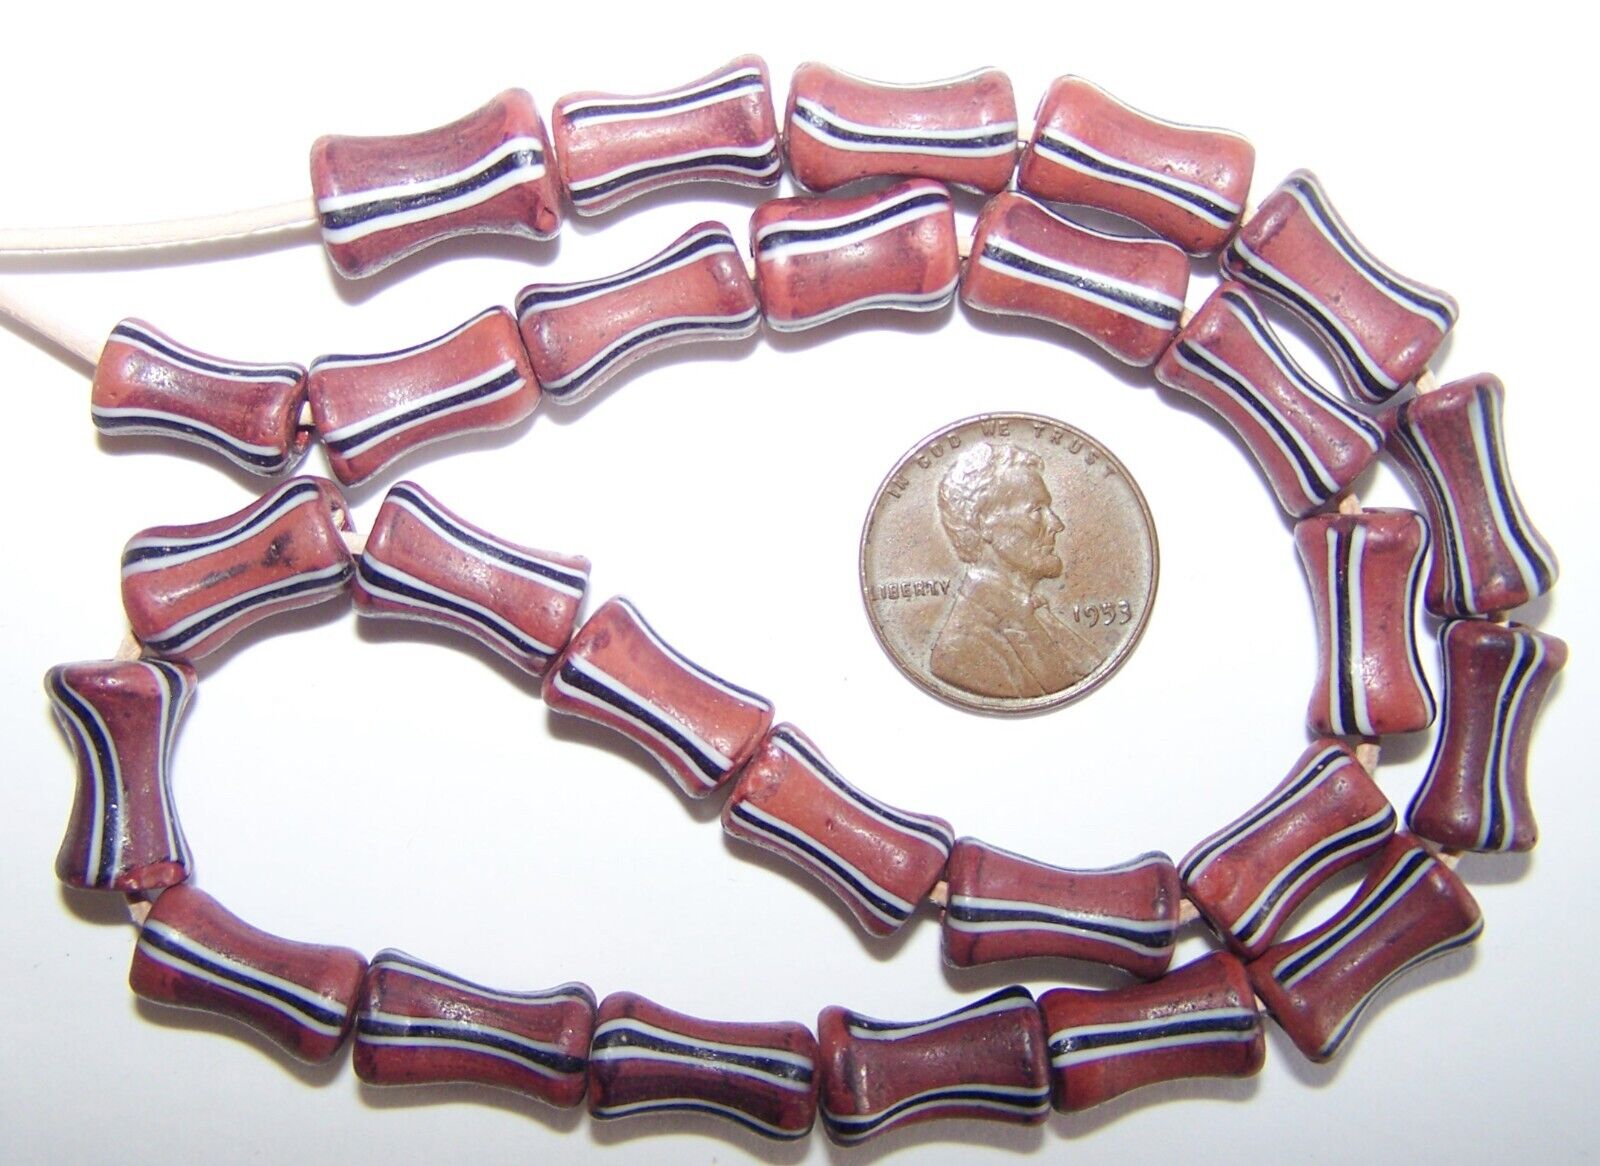 Antique Venetian Trade Beads - Brick Red /Brown Striped Dogbones- Rare Shape